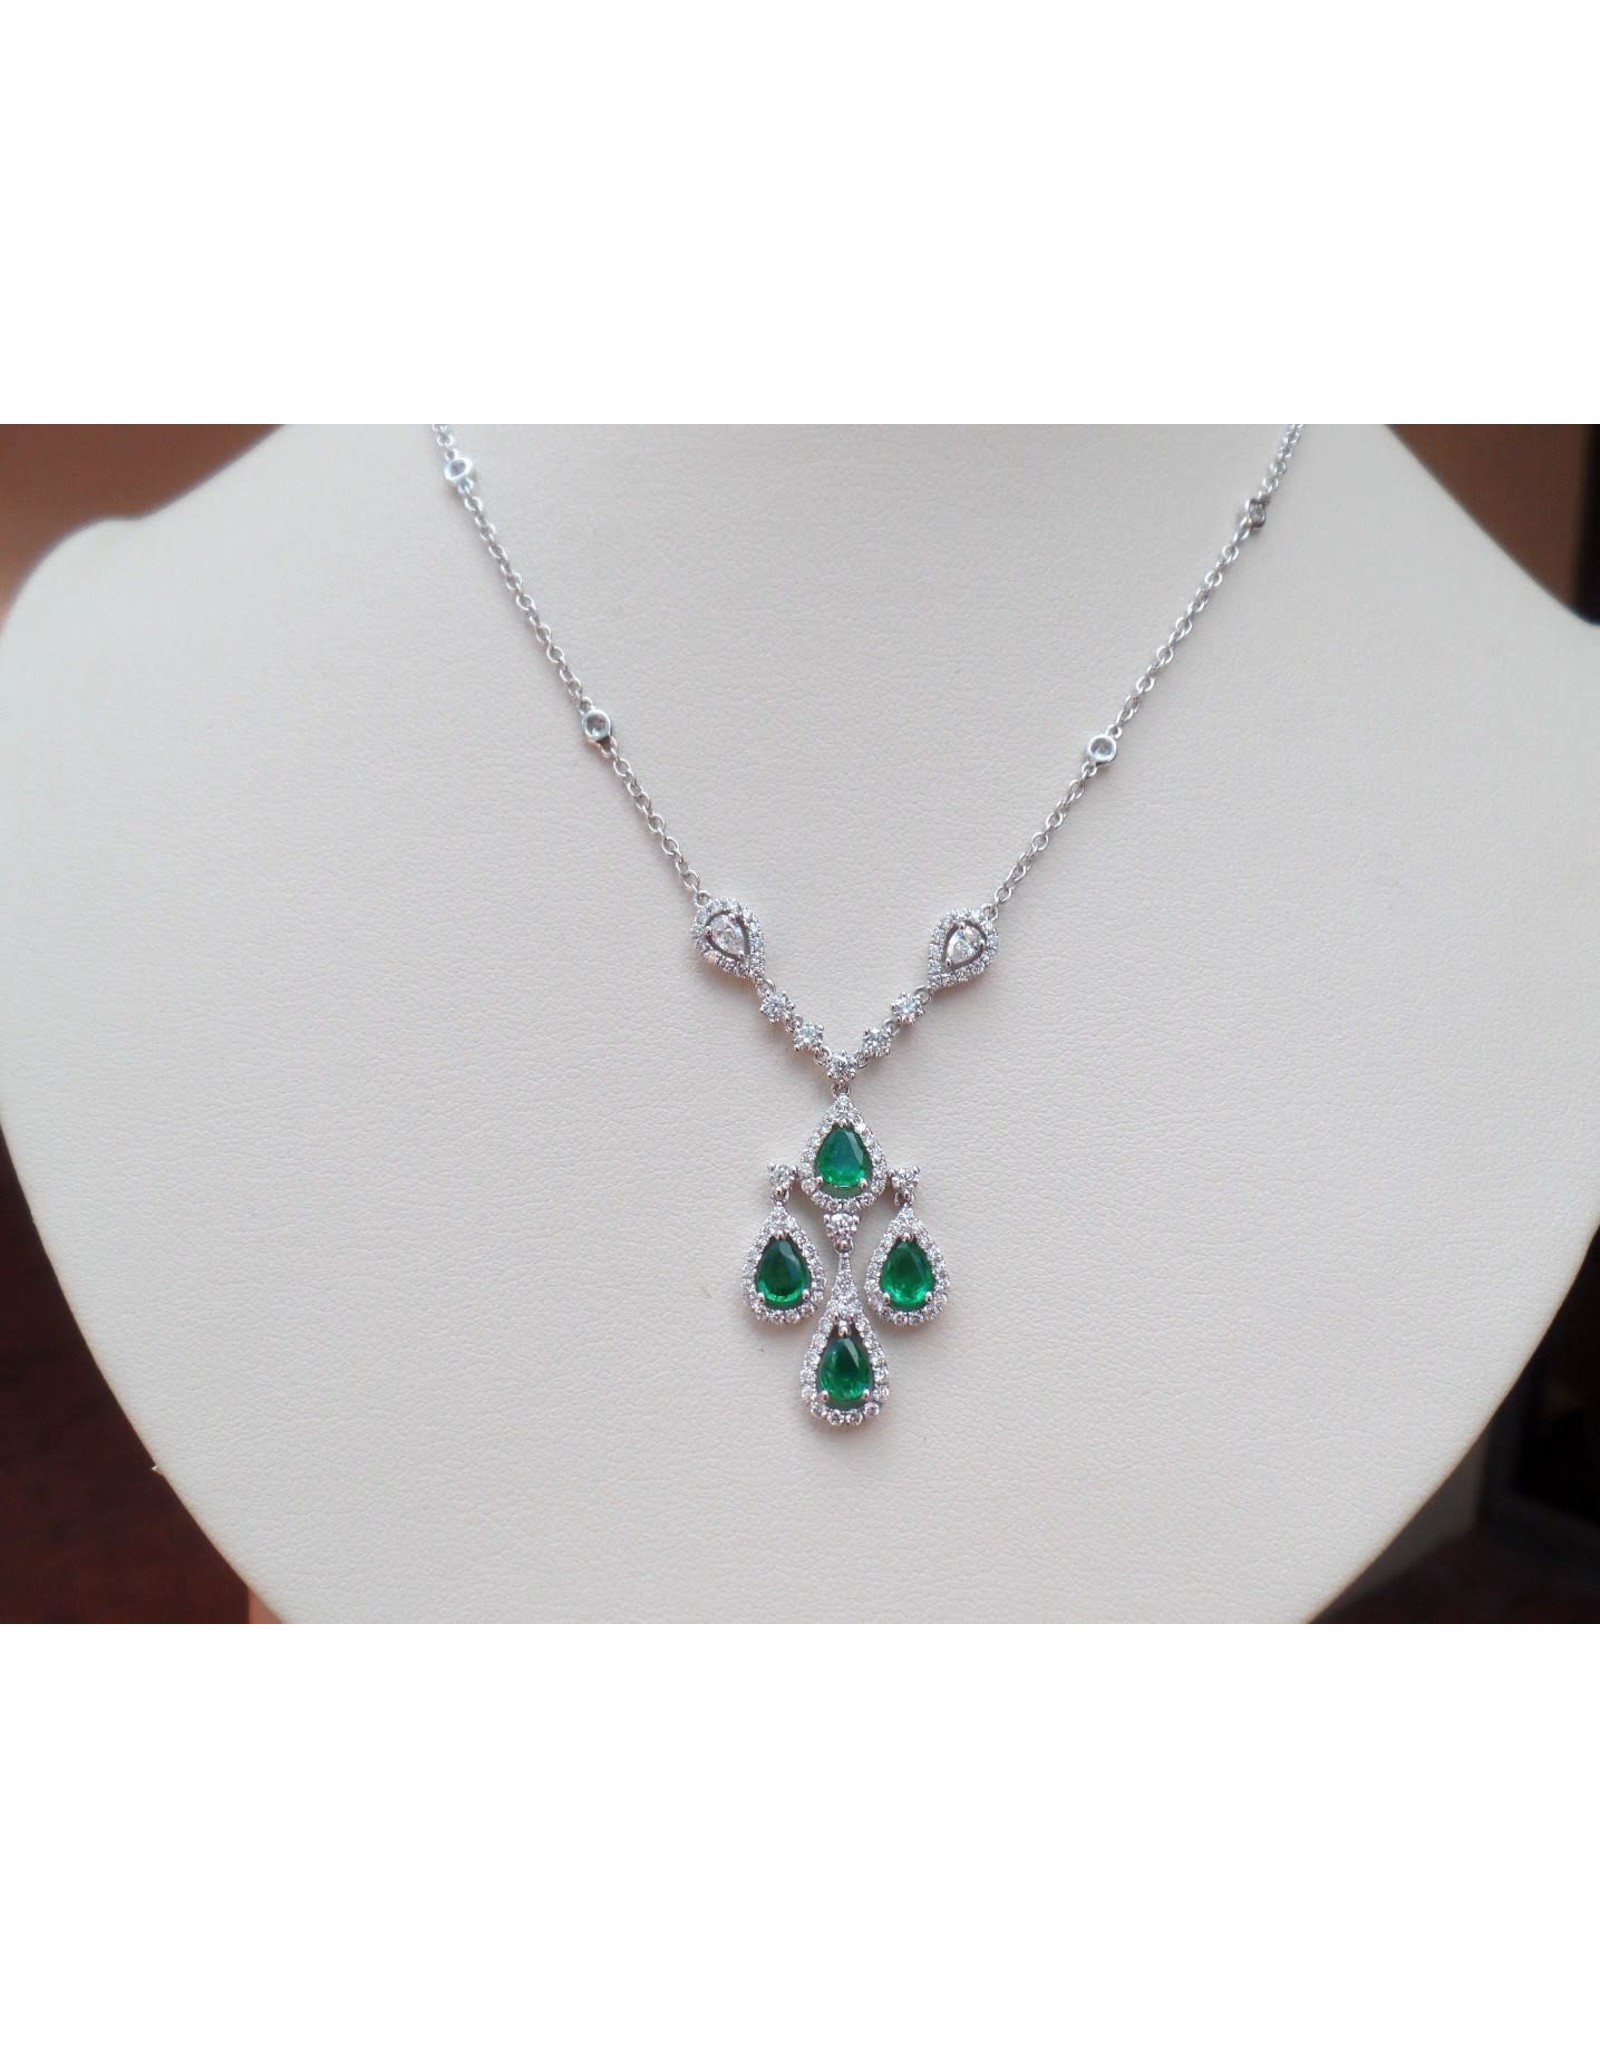 18K White Gold Elegant Emerald and Diamond Necklace, E: 0.88ct, D: 1.36ct